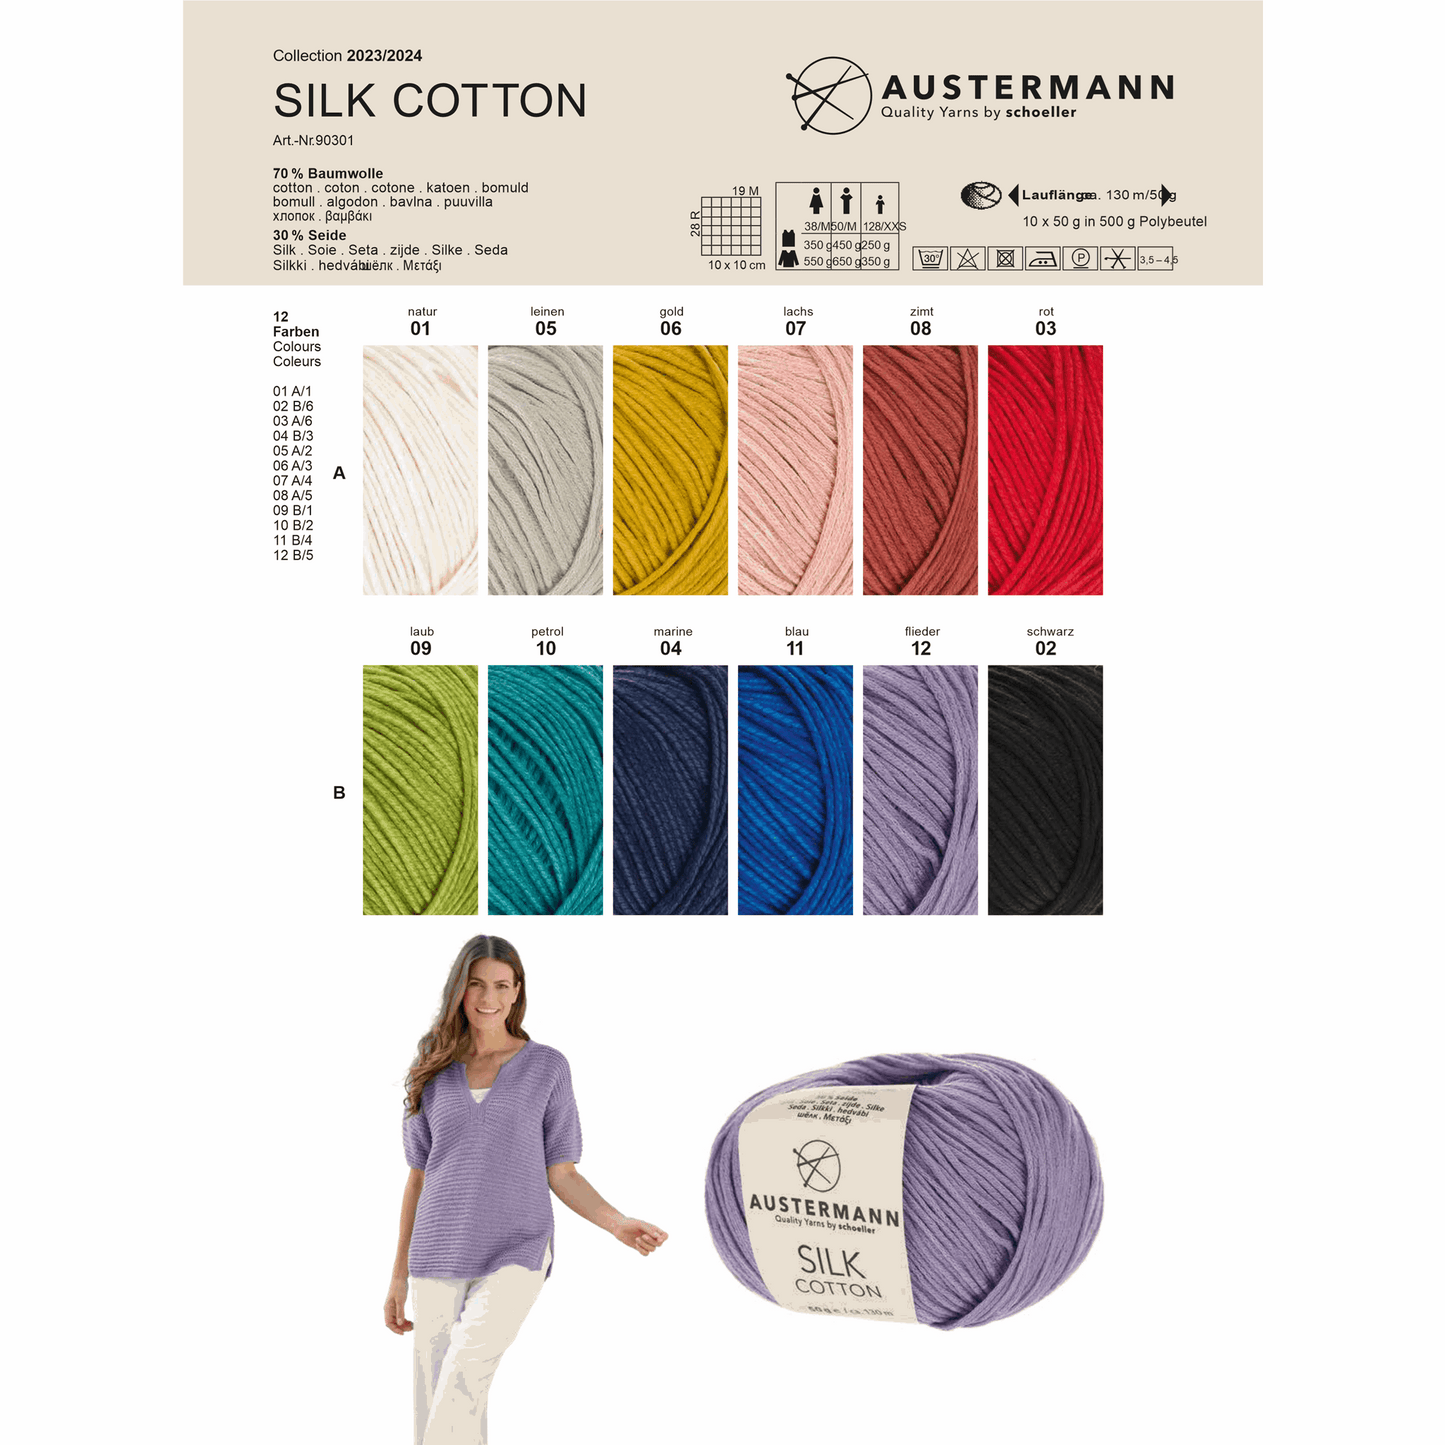 Silk Cotton 50g, 90301, Farbe 3, rot